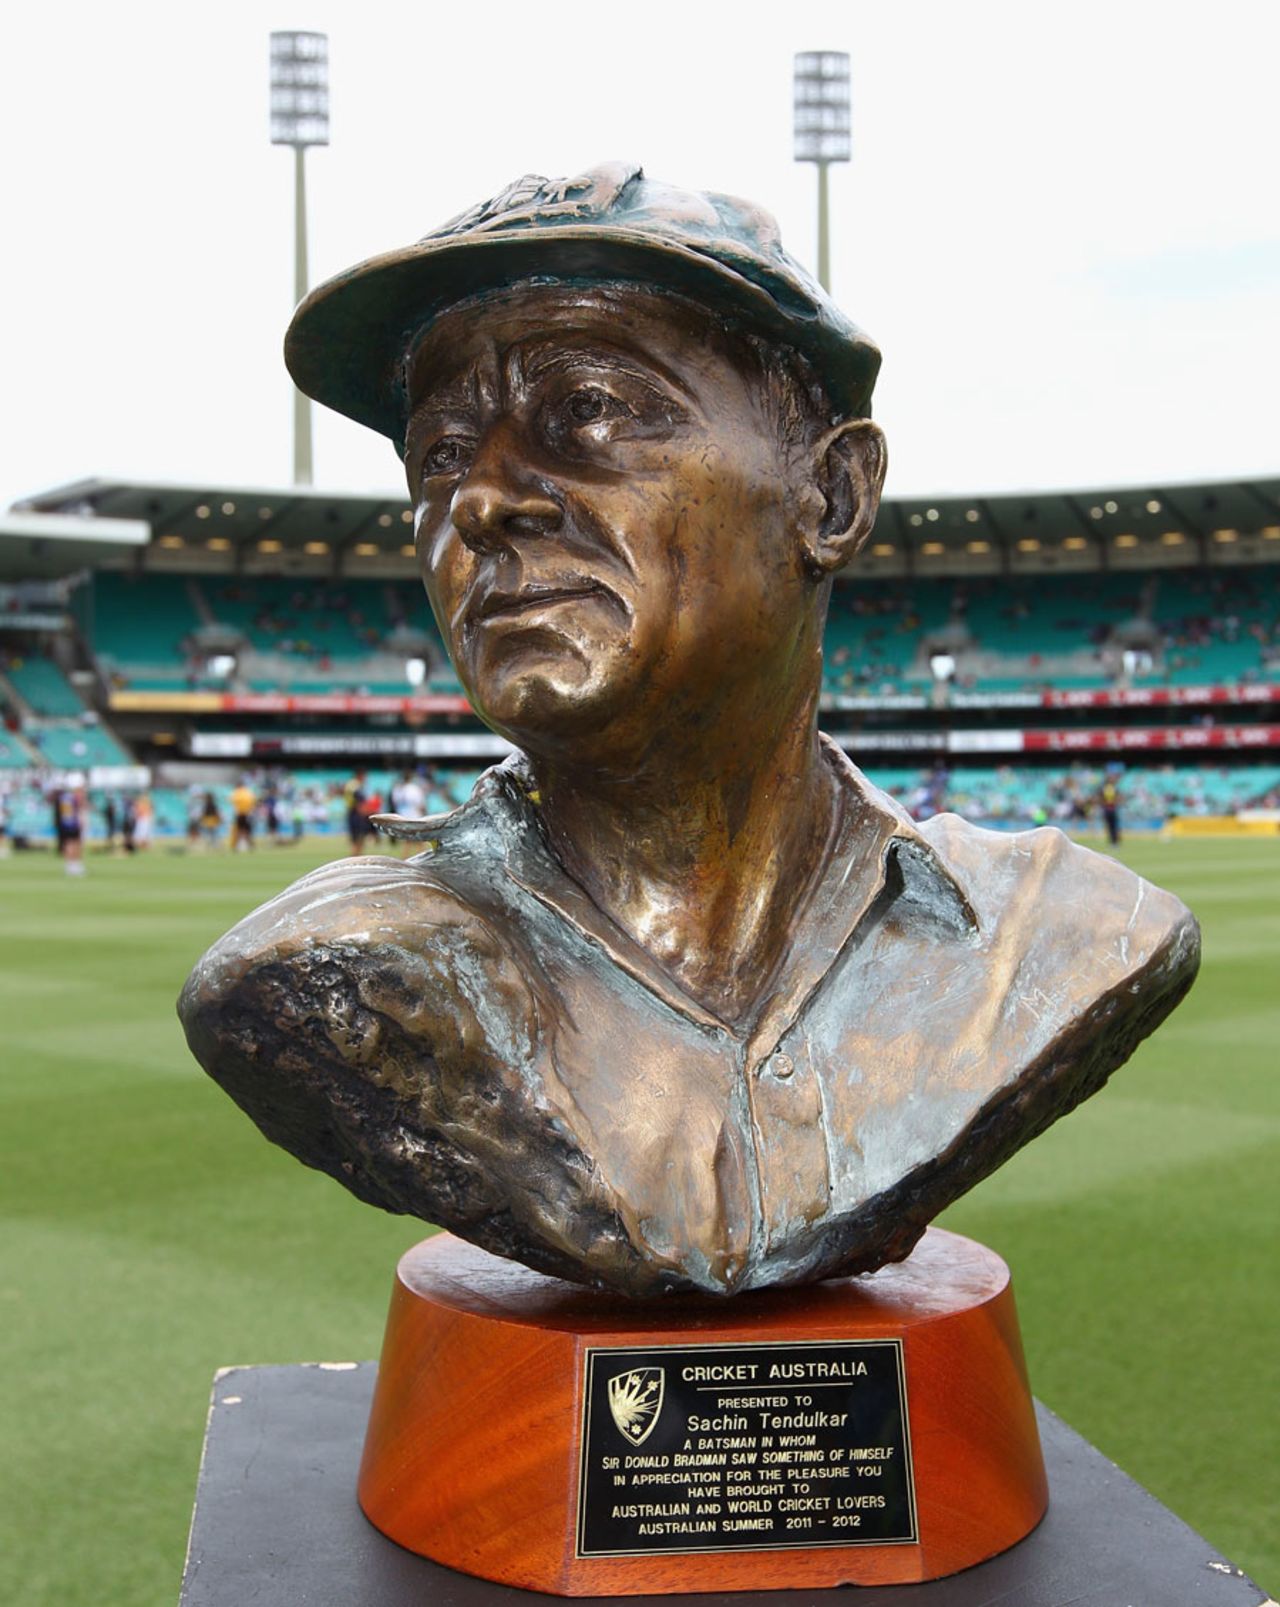 The bust of Donald Bradman that was presented to Sachin Tendulkar, Australia v India, CB Series, Sydney, February 26, 2012